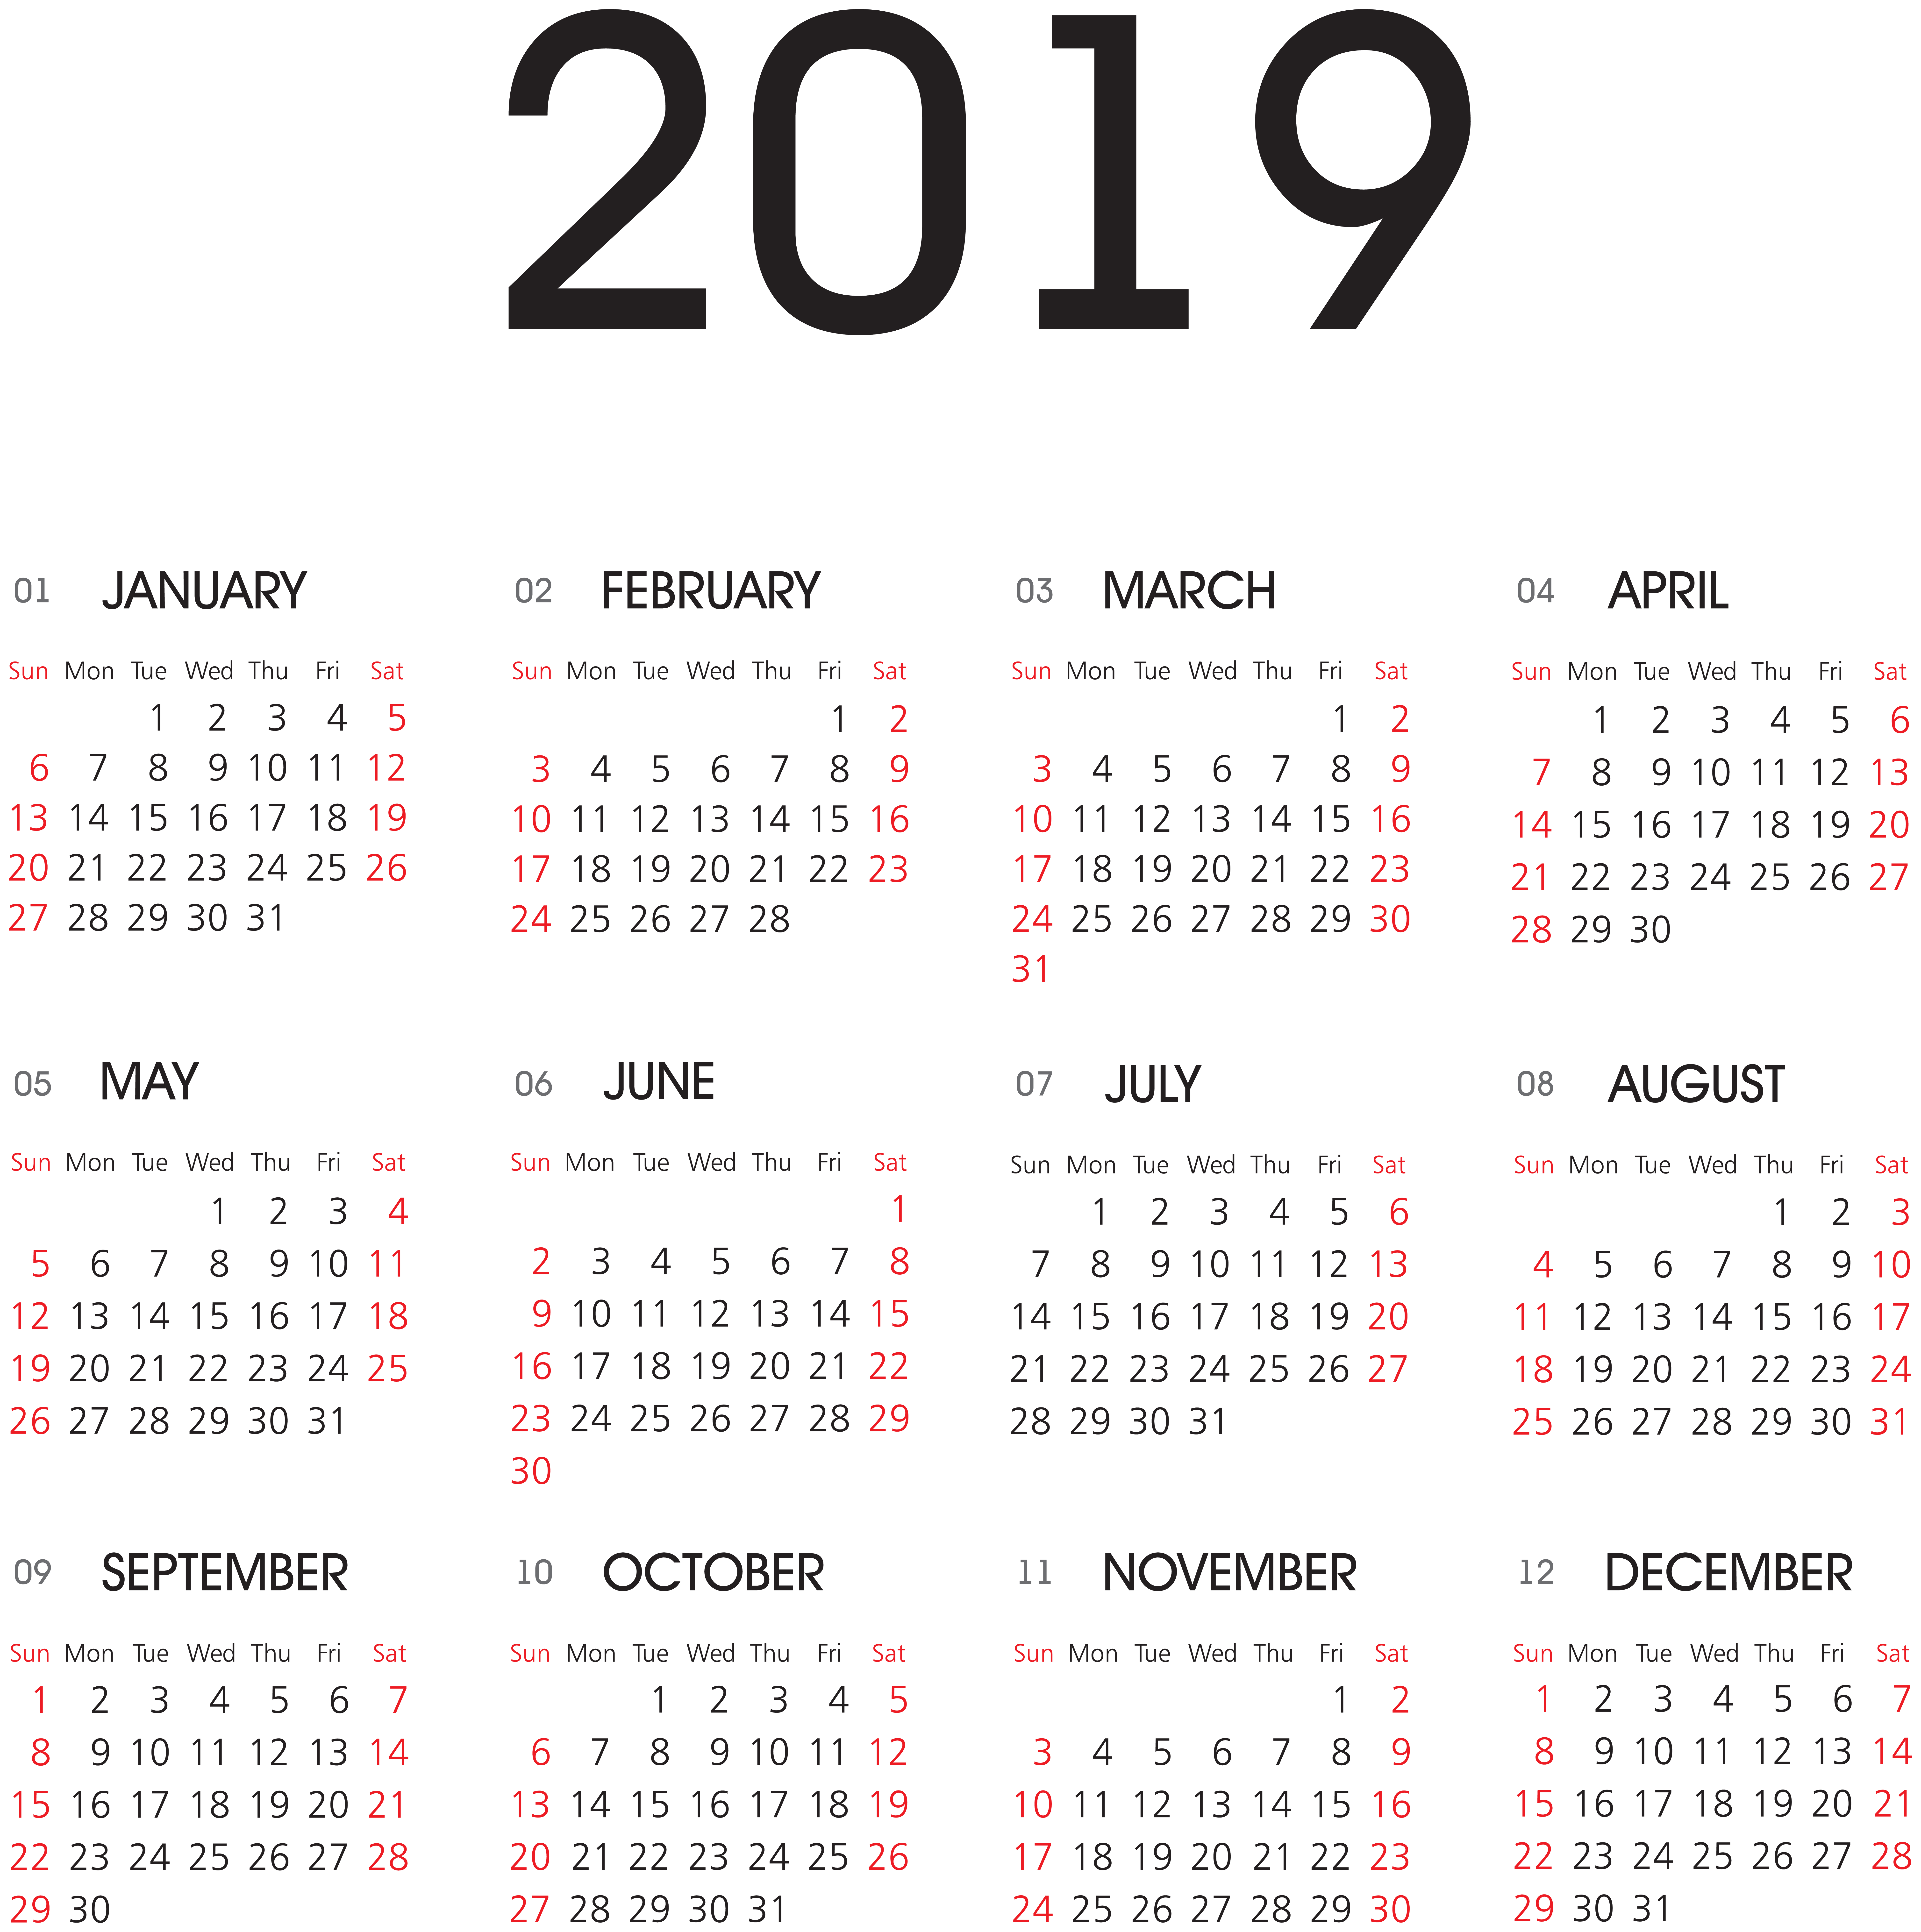 2019 Calendar PNG Transparent Image | Gallery Yopriceville - High ...